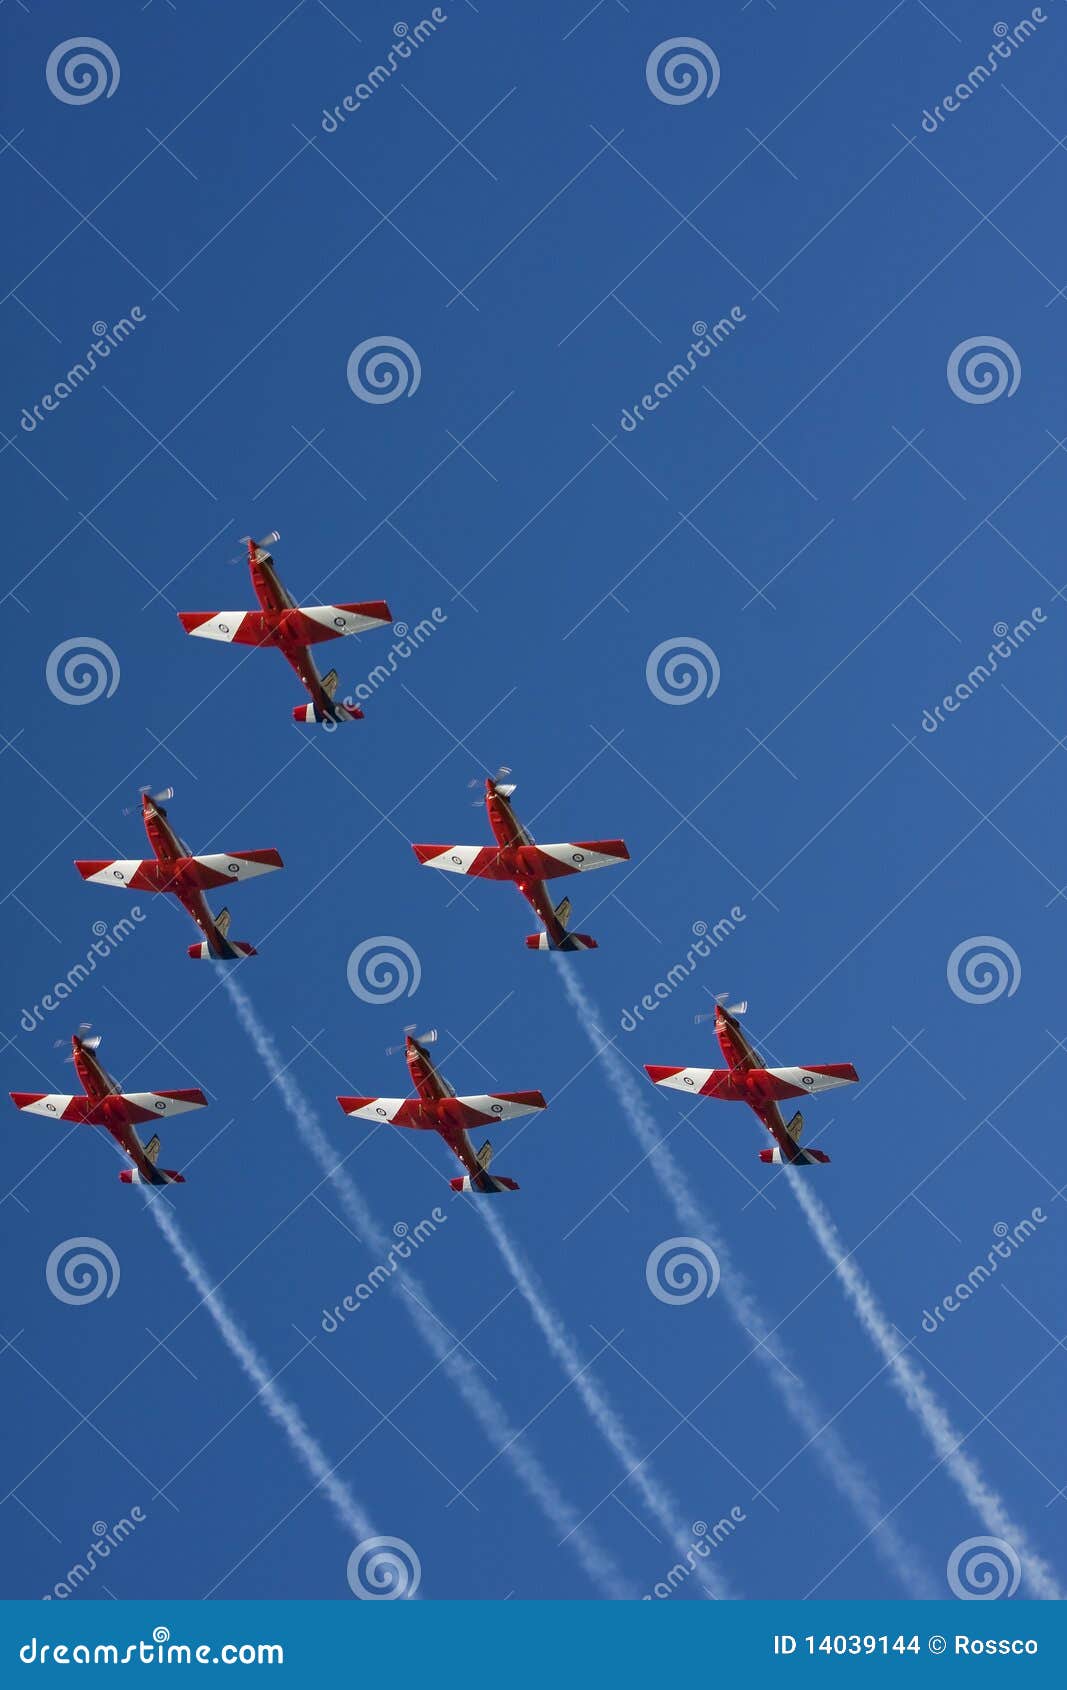 aerobatic formation